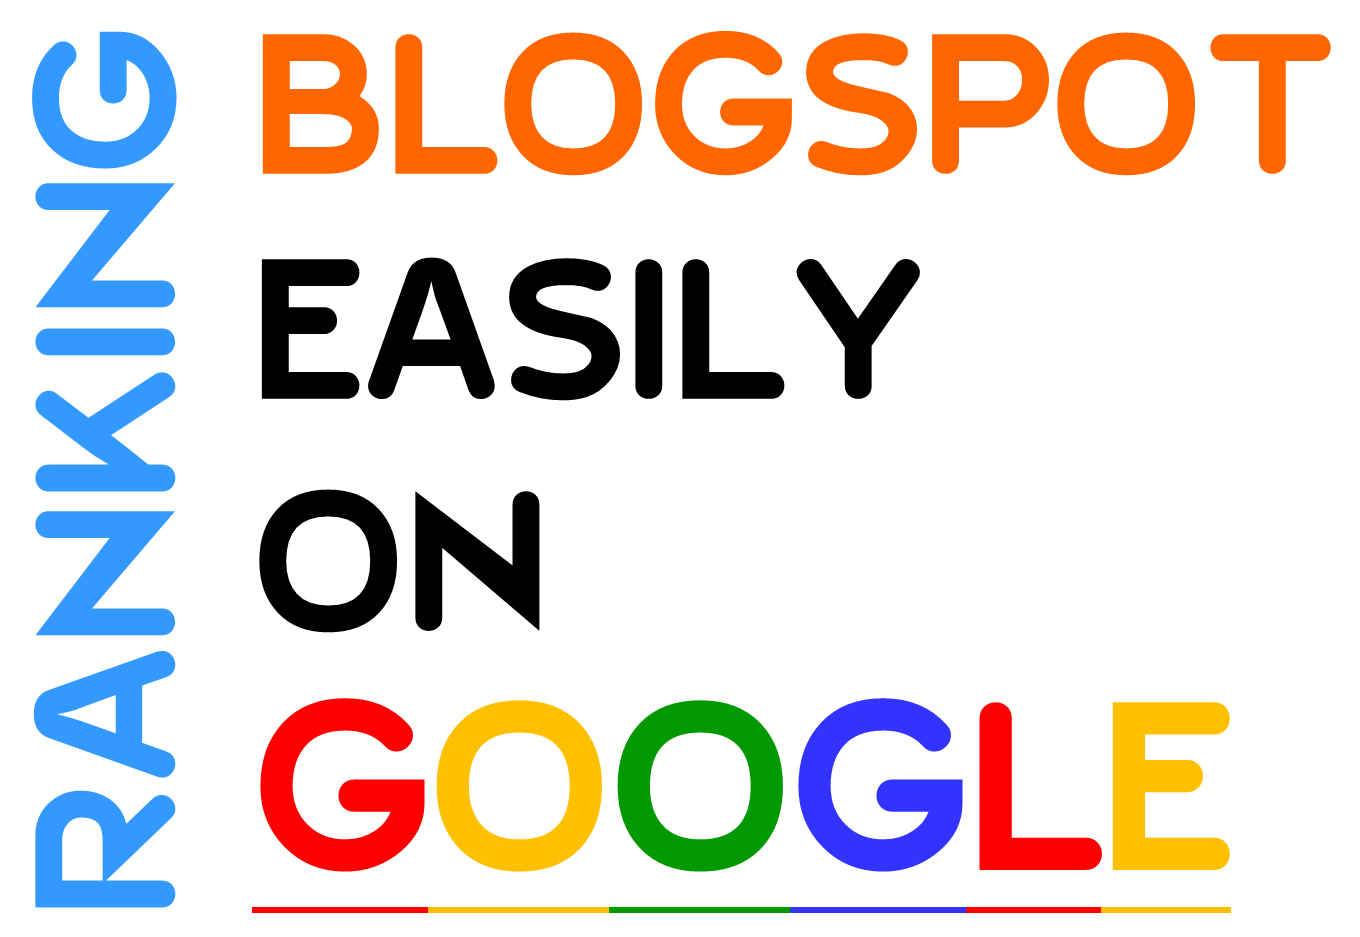 Ranking a blogspot easily on google